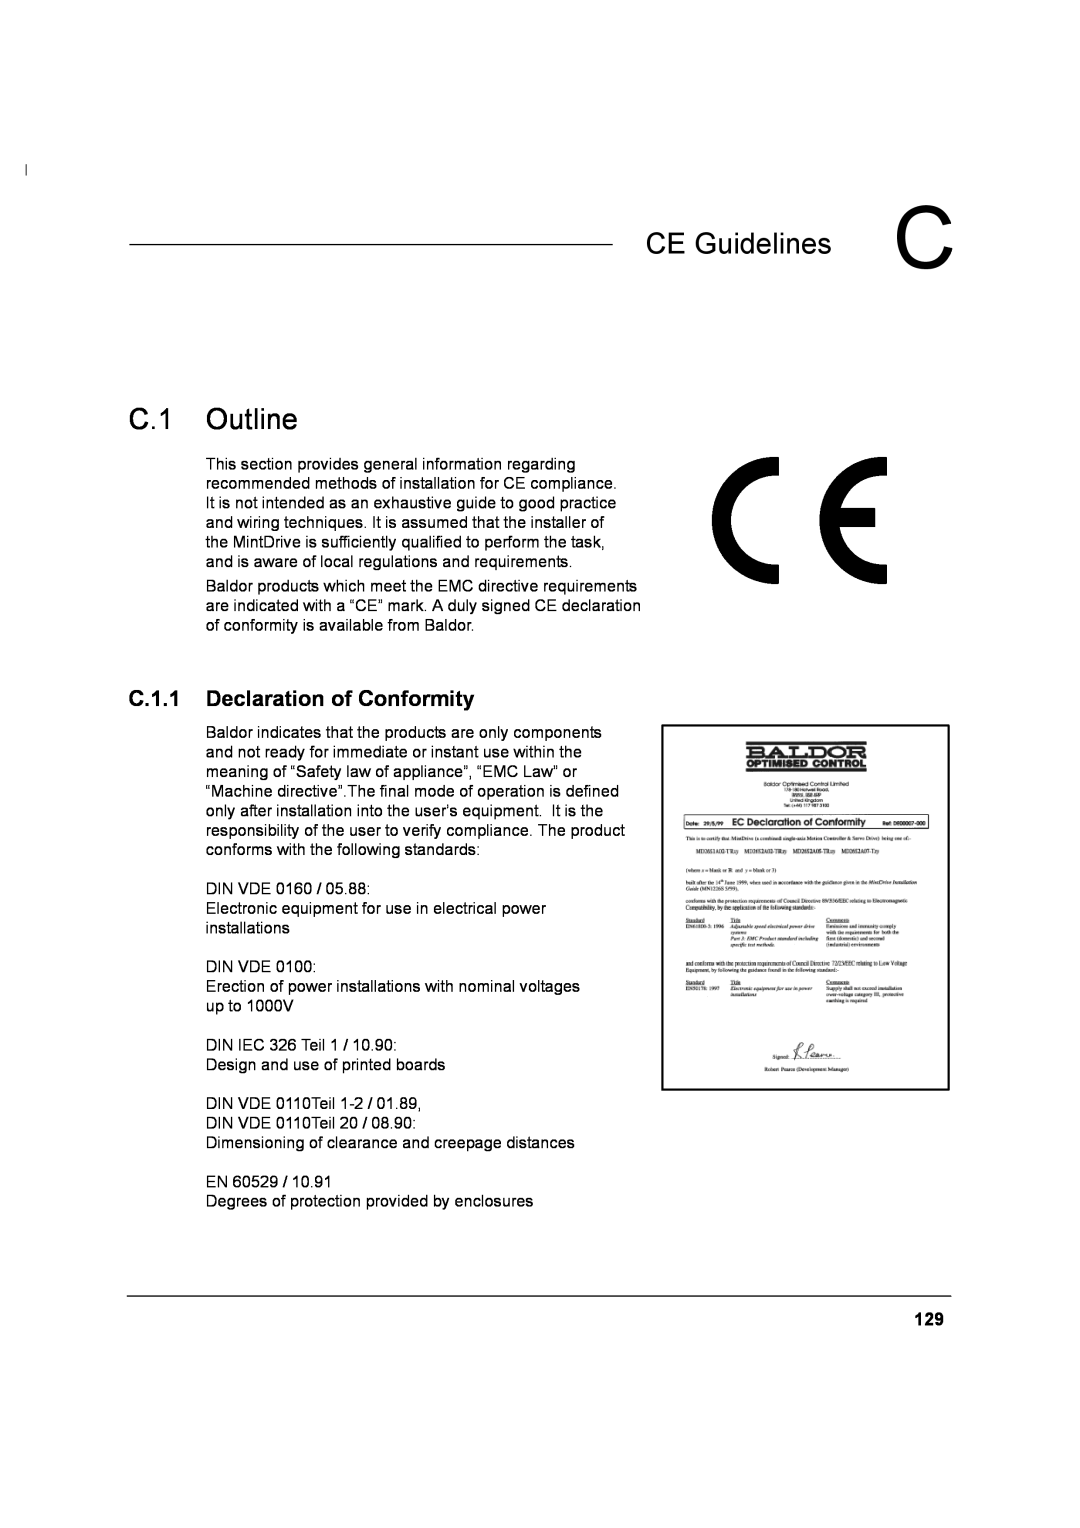 Baldor MN1274 06/2001 installation manual C CE Guidelines, C.1 Outline, C.1.1 Declaration of Conformity 